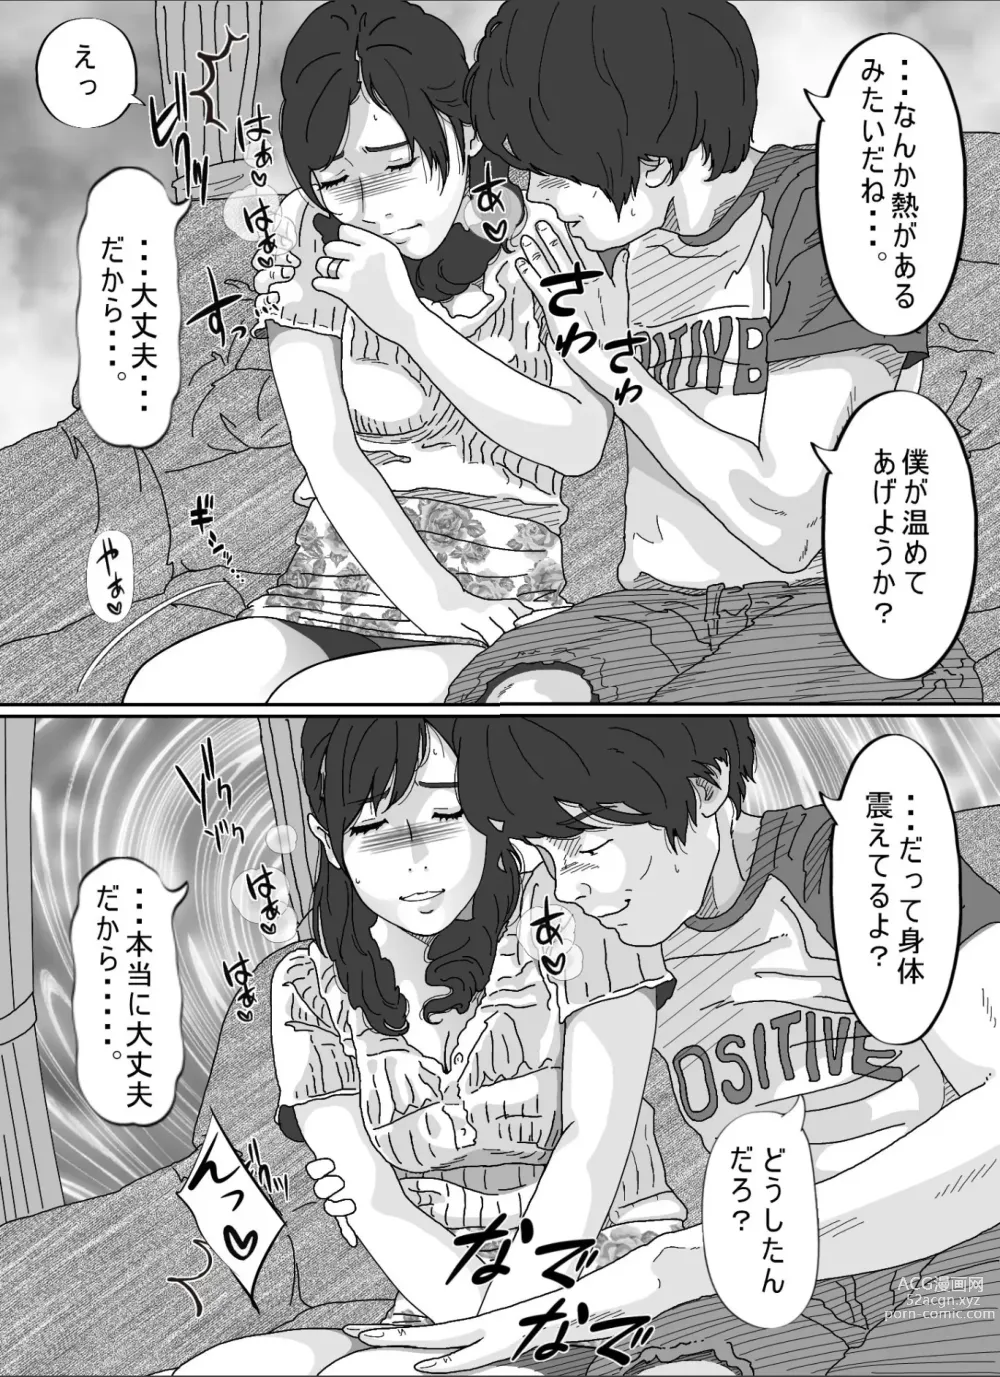 Page 21 of doujinshi Tomodachi no Okaa-san.